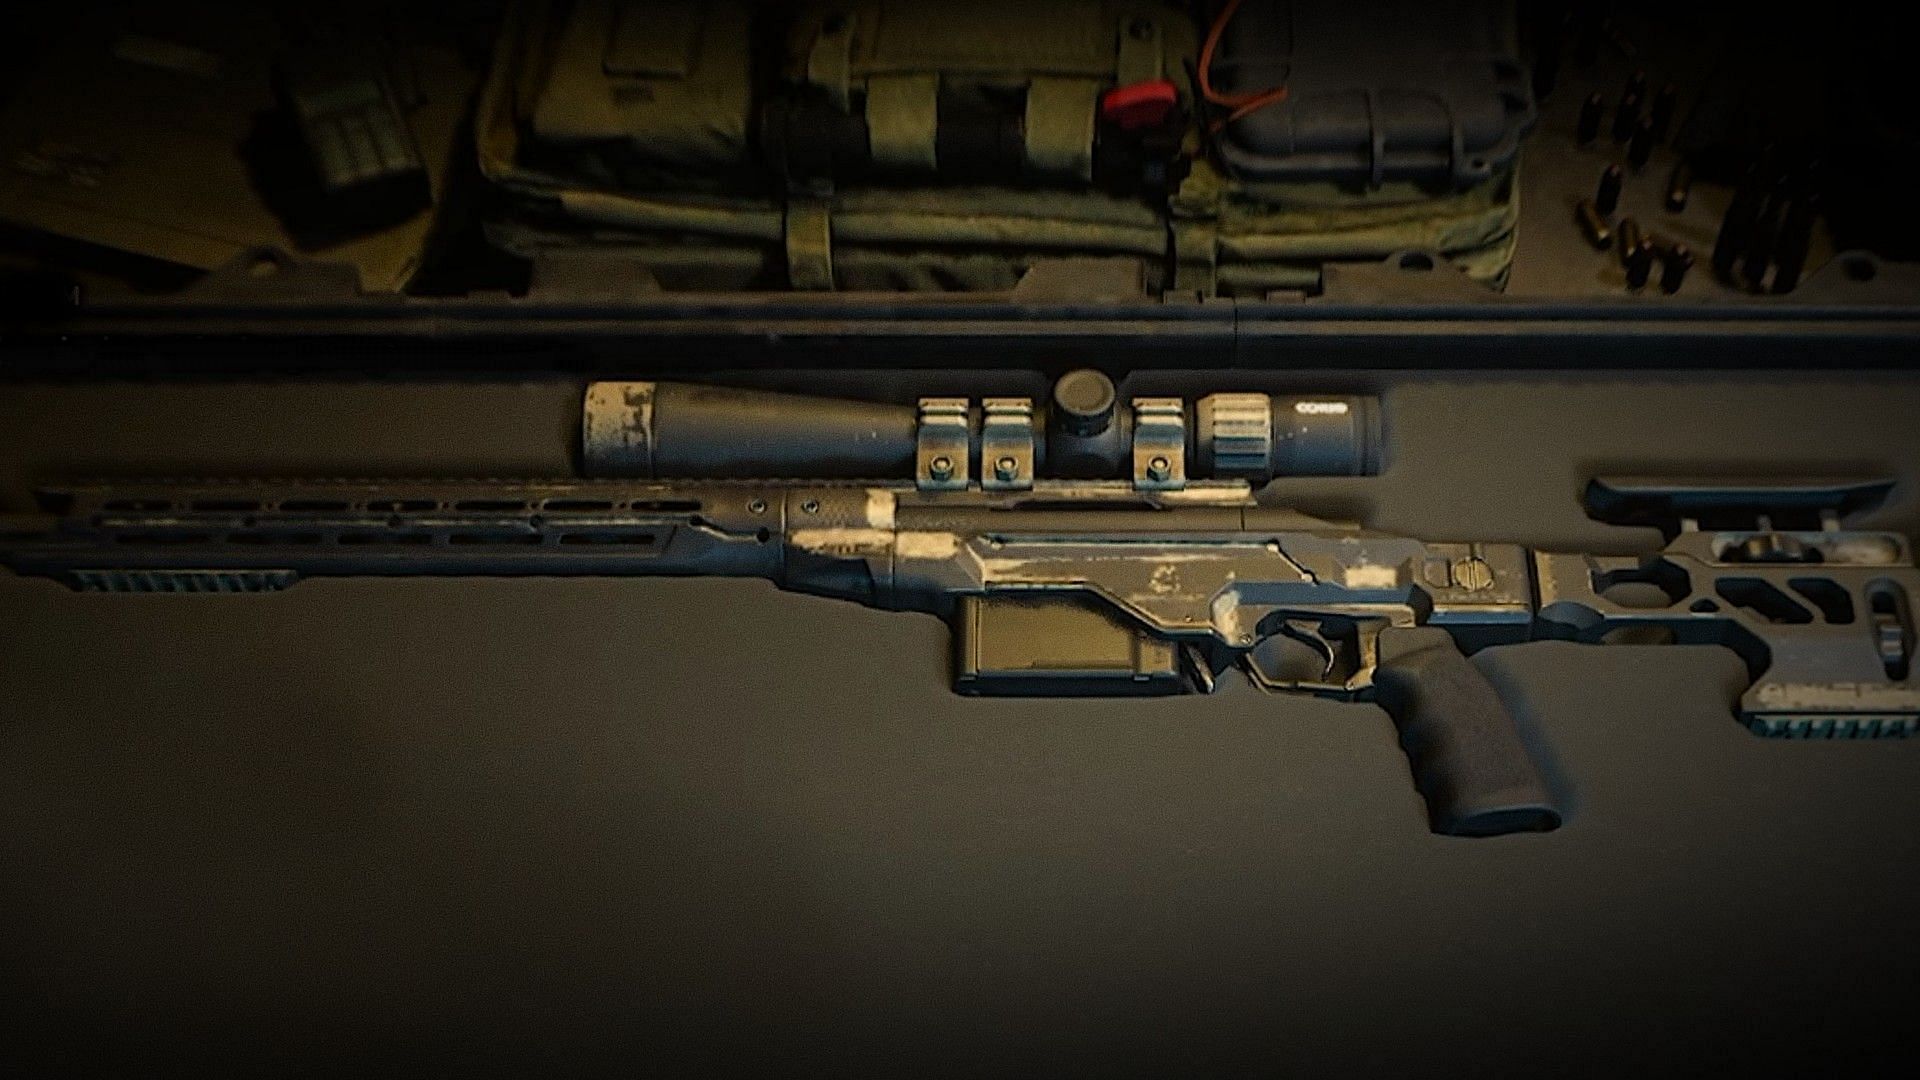 SP-X 80 Sniper Rifle in Modern Warfare 2 (image via Activision)